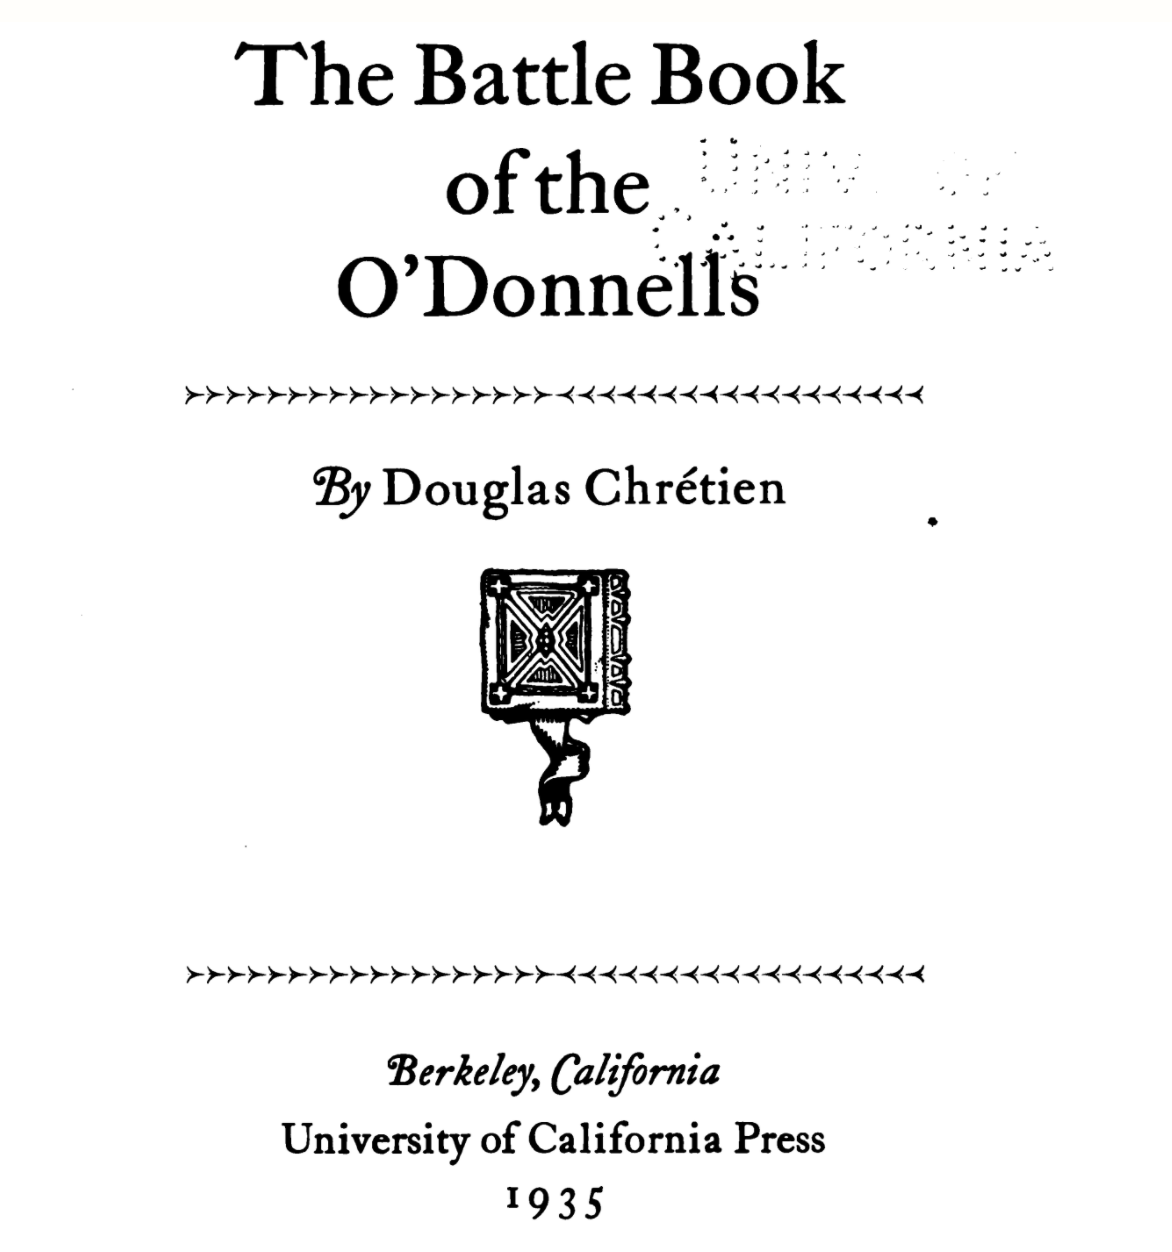 "The Battle Book of the O'Donnells" by C. Douglas Chrétien